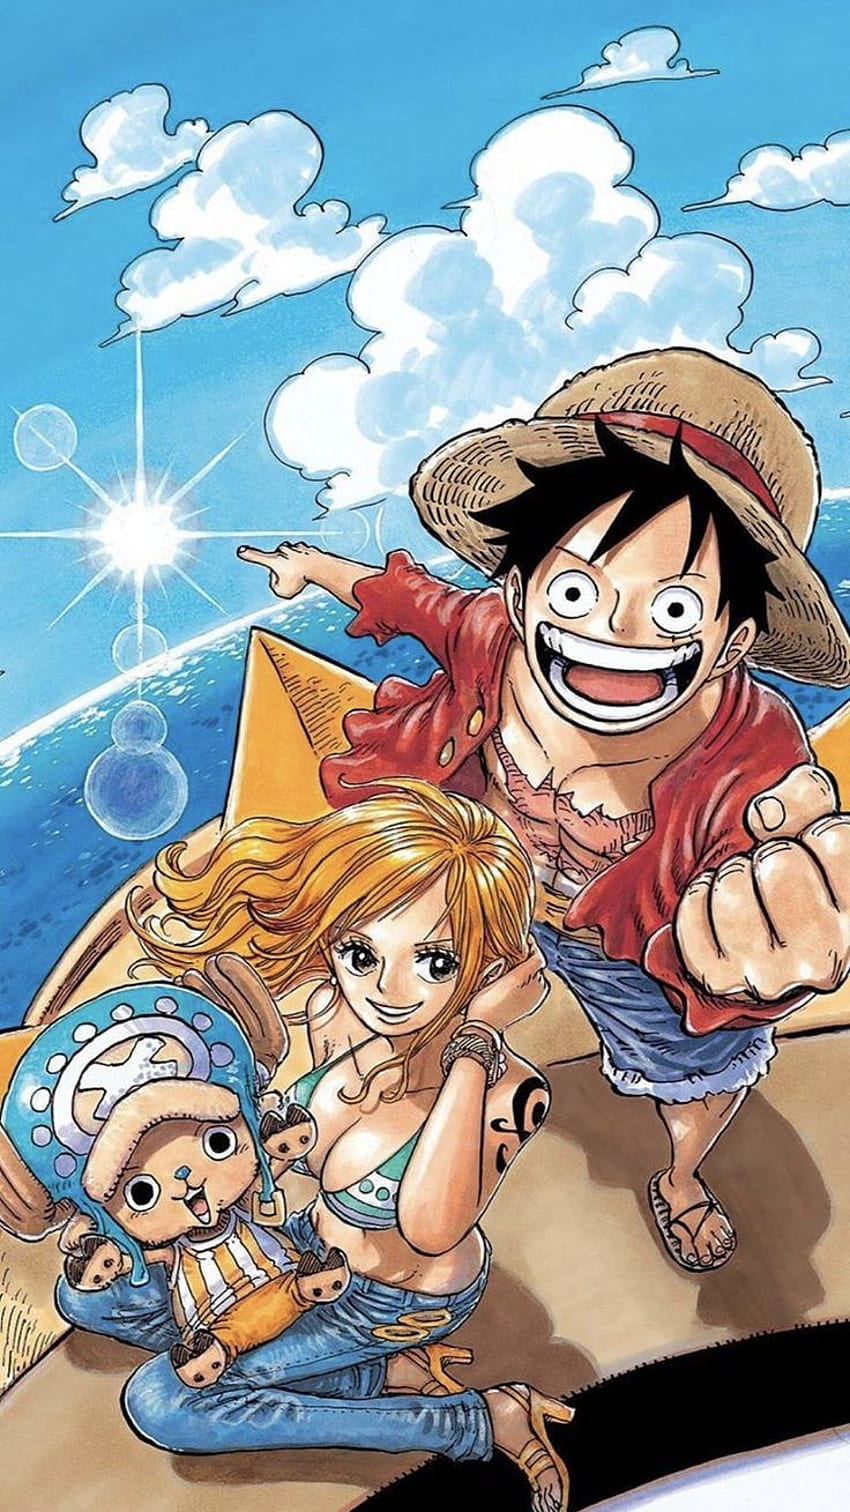 1179x2556px 1080p Free Download Luffy Anime Nami One Piece Chopper Manga Hd Phone